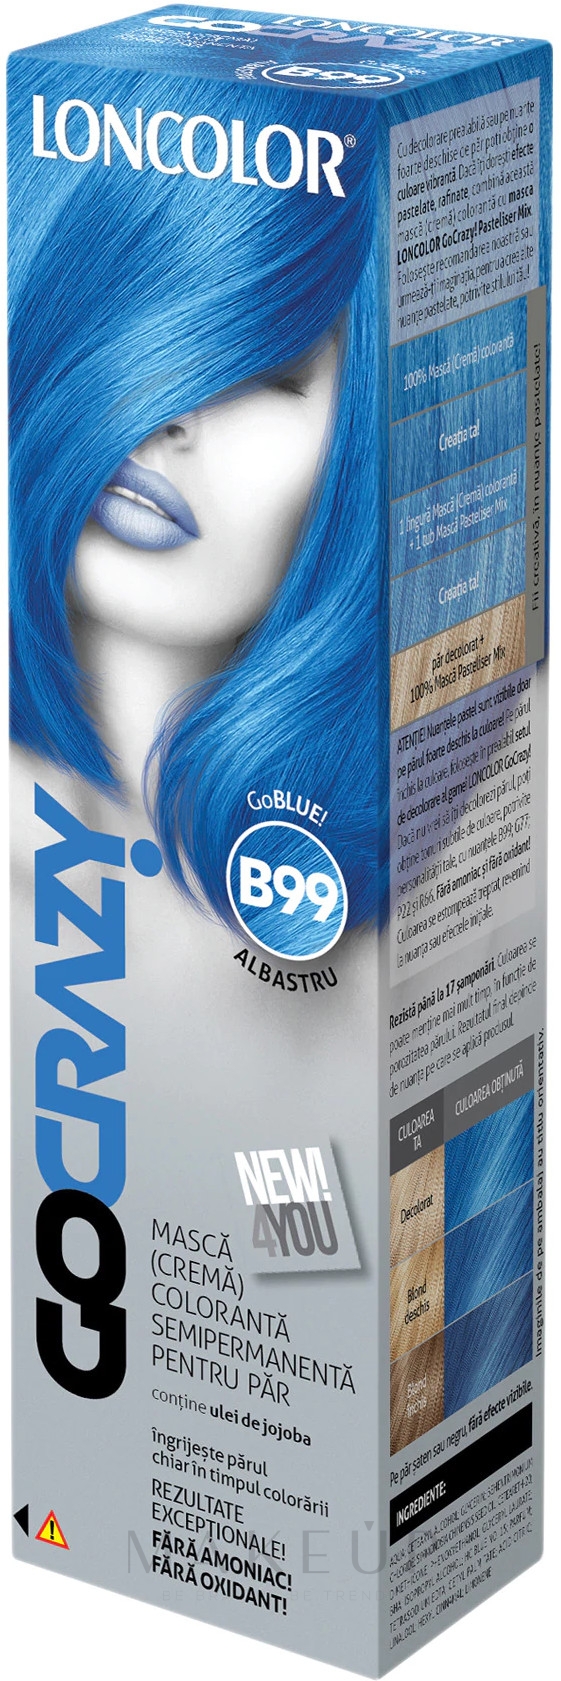 Semipermanente Haarfarbe-Maske - Loncolor GoCRAZY! — Bild B99 - GoBlue!